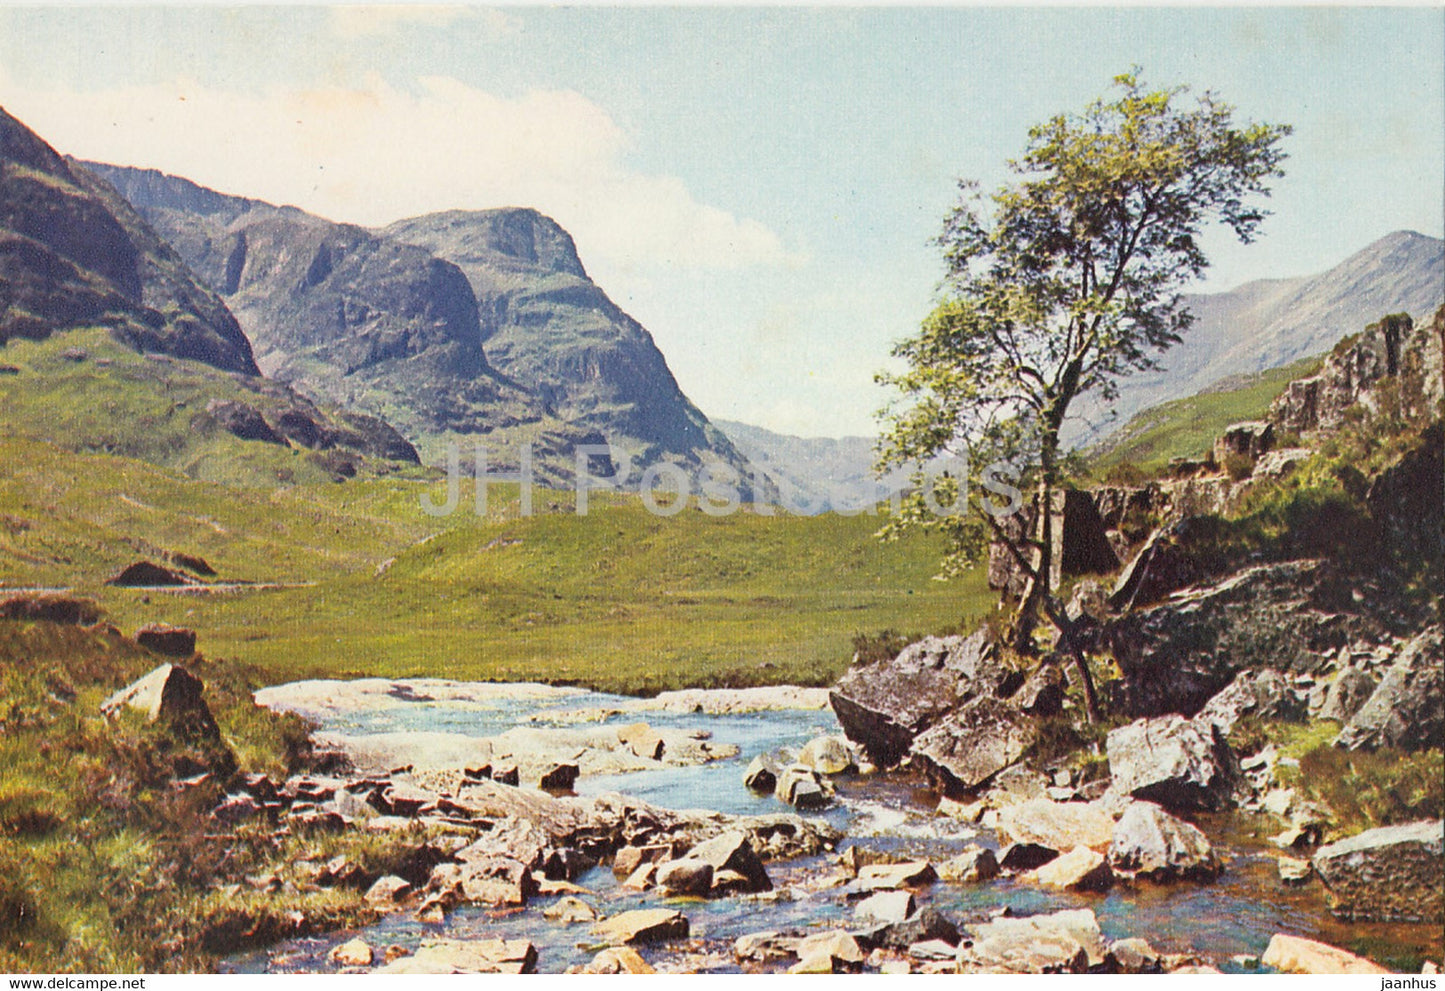 On the river Coe - Glencoe - Argyllshire - Three Sisters Group - Scotland - United Kingdom - unused - JH Postcards